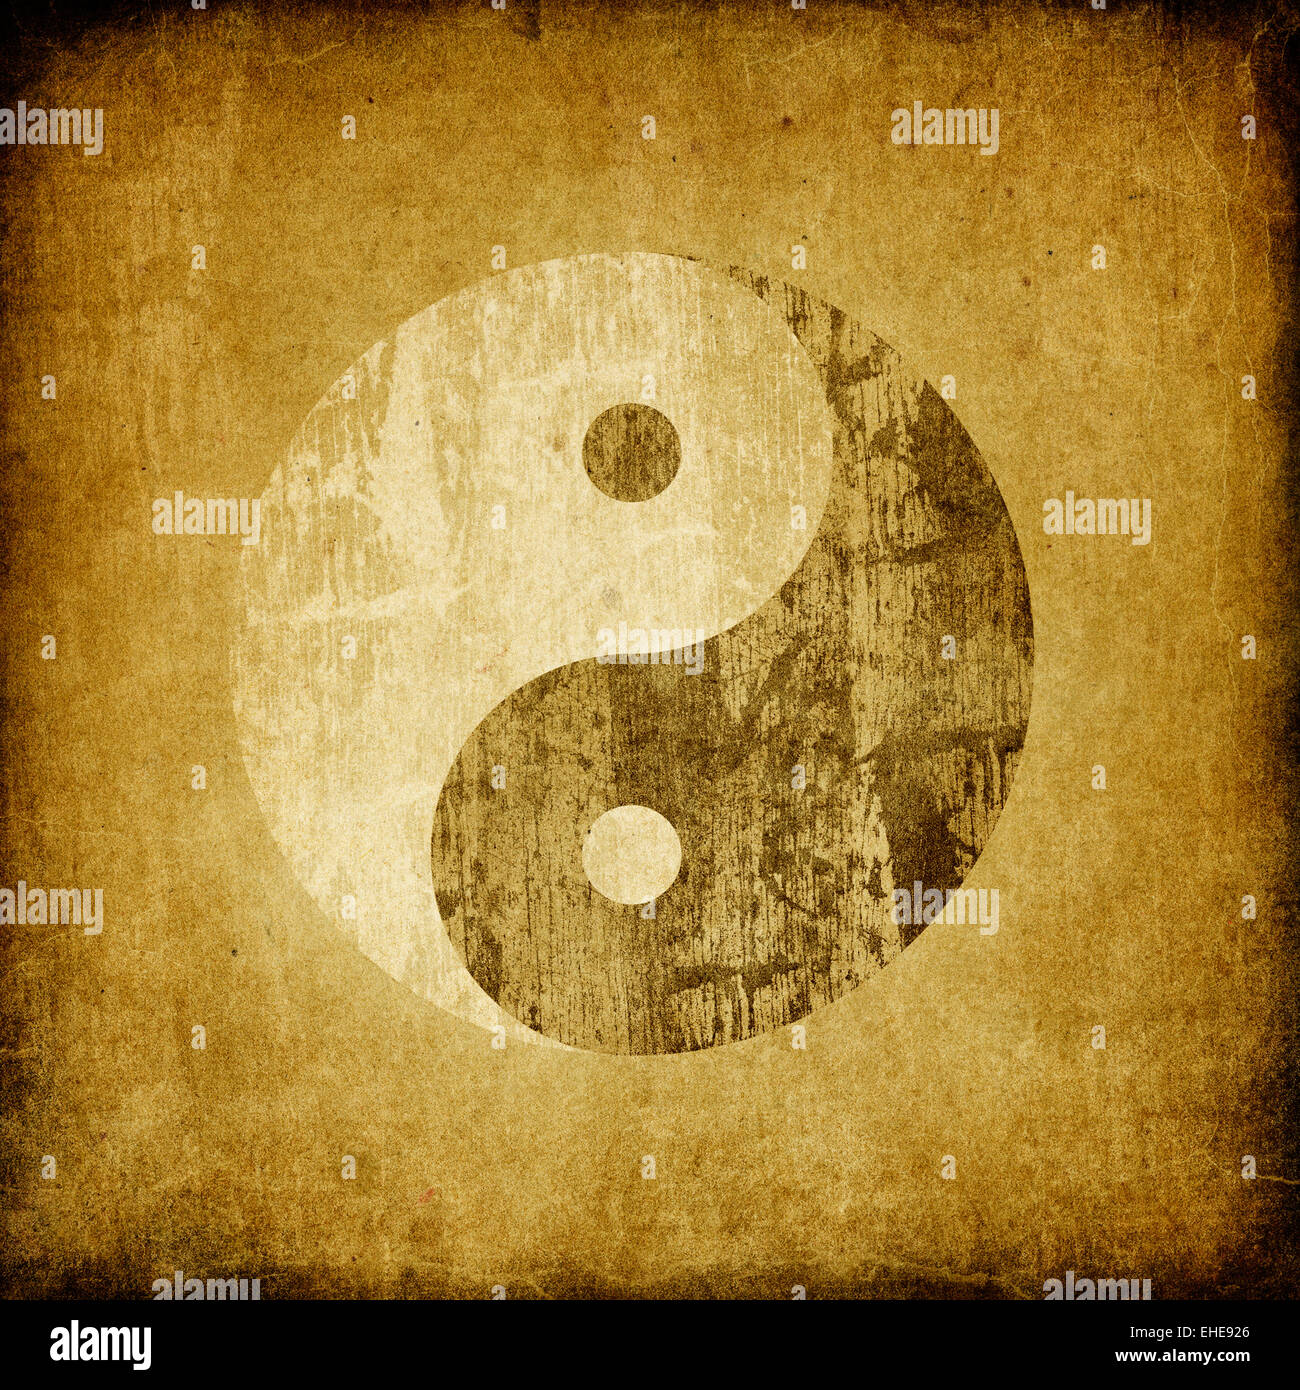 Grunge fond symbole Yin Yang. Banque D'Images